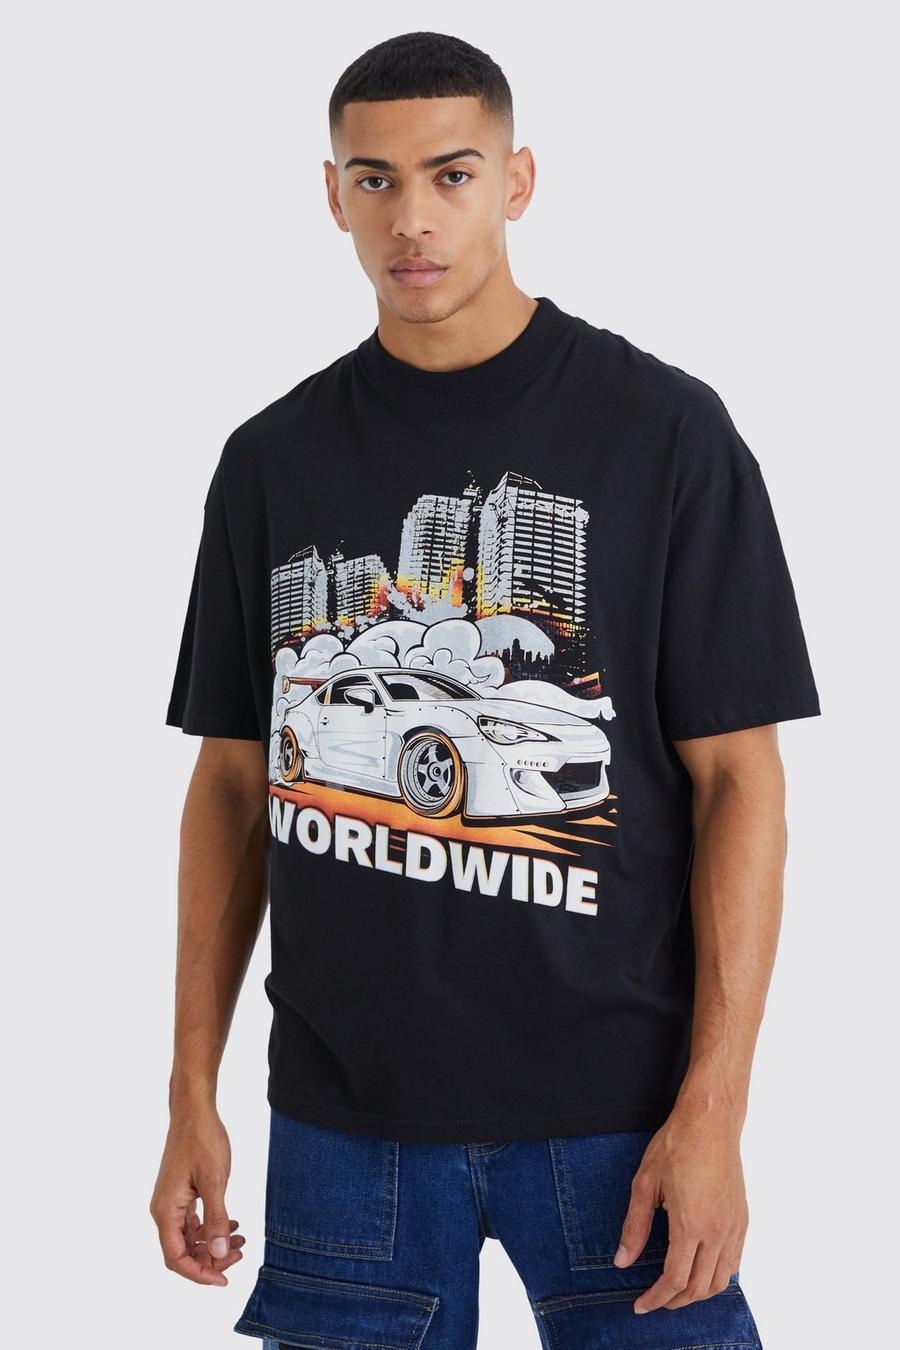 Black Oversized Worldwide Car Graphic Ex T-shirt